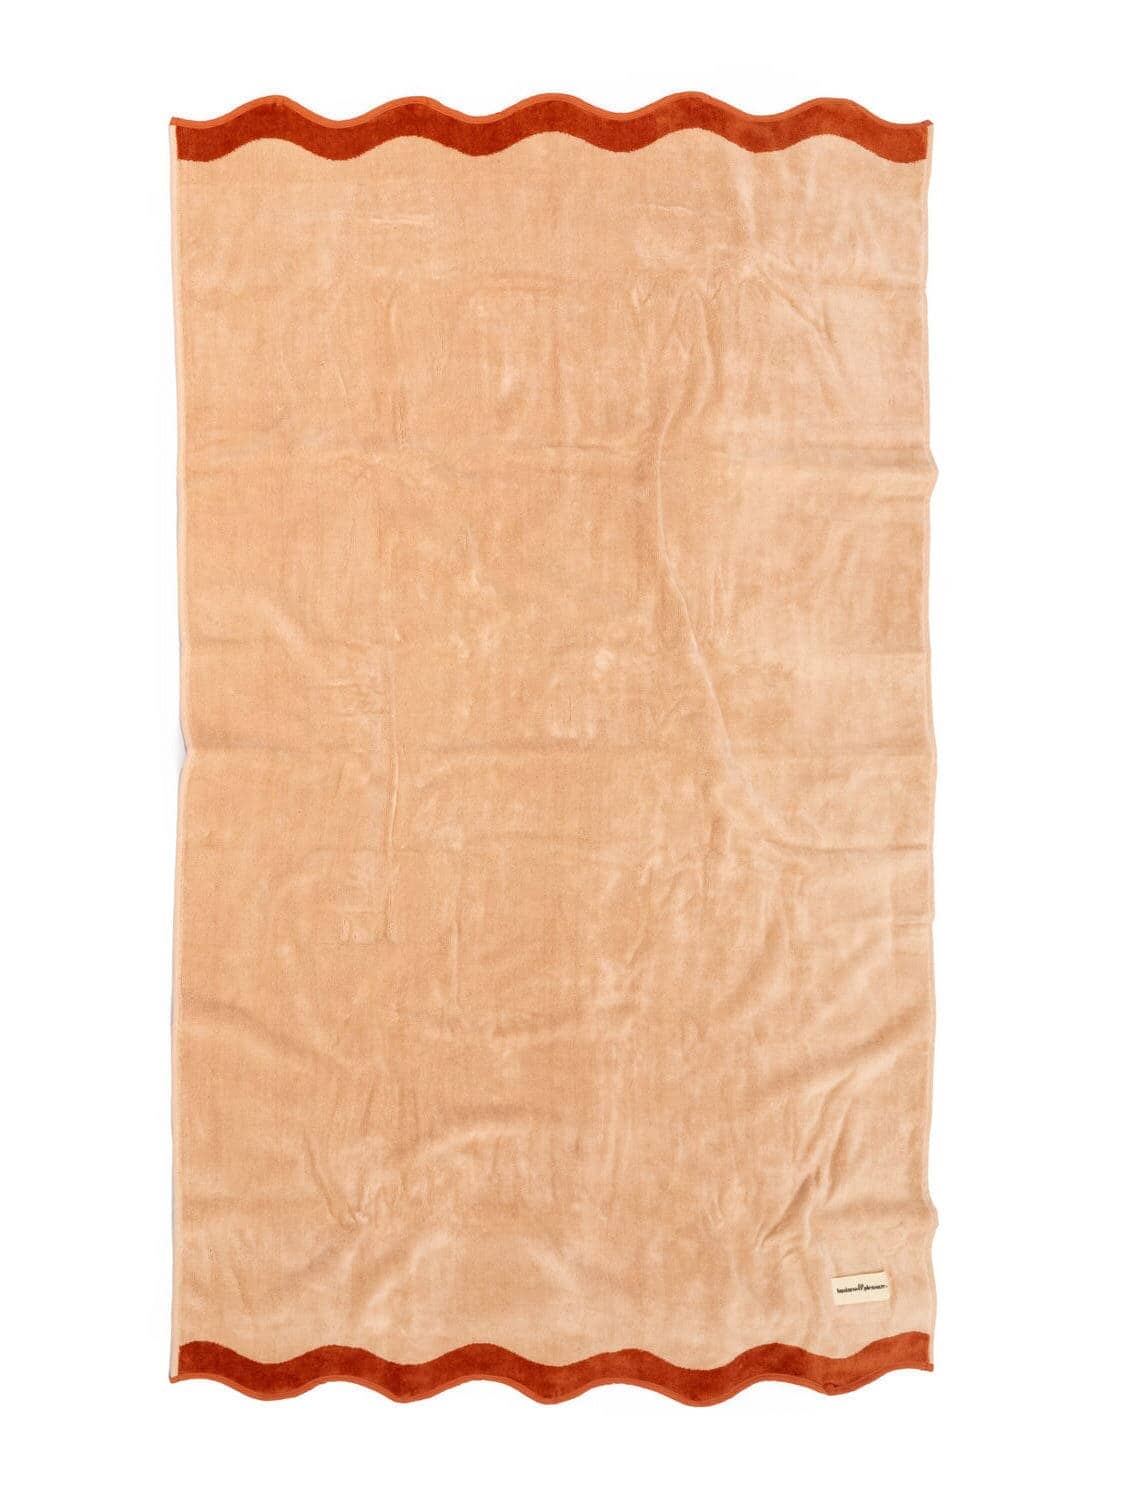 Studio image of riviera pink beach towel. 